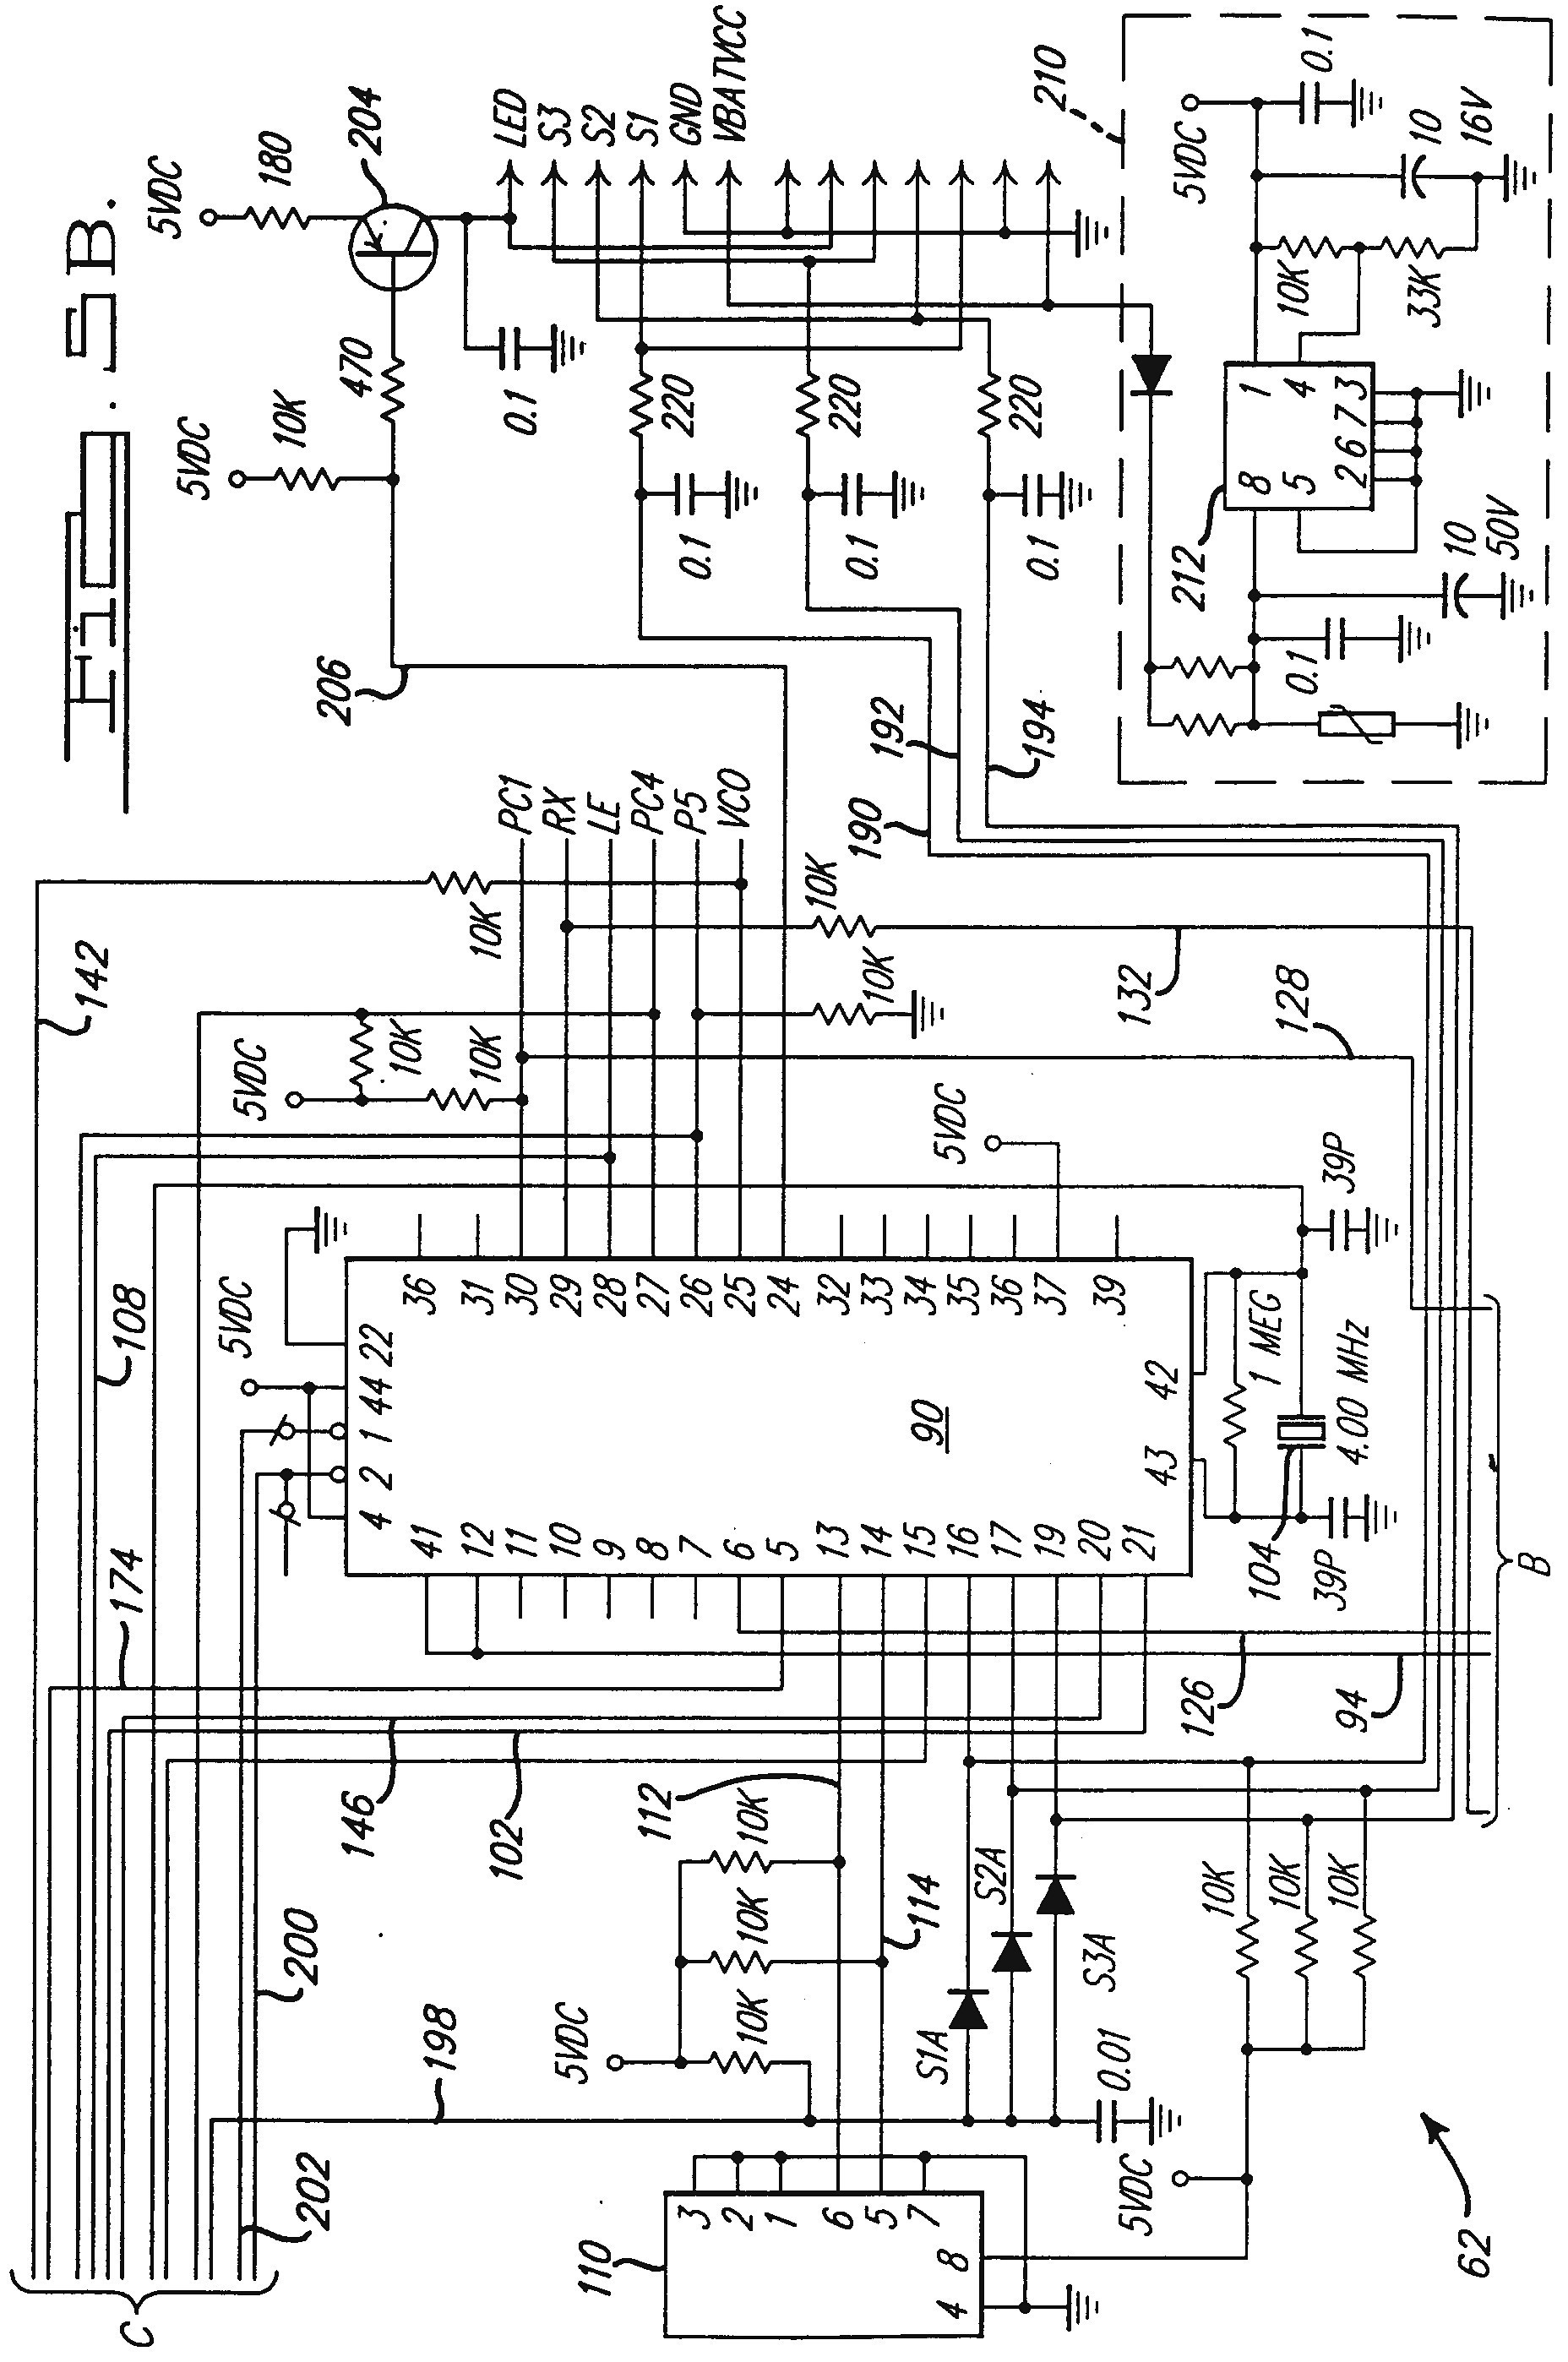 207b7a Wiring Diagram For Lift Master Door Opener Wiring